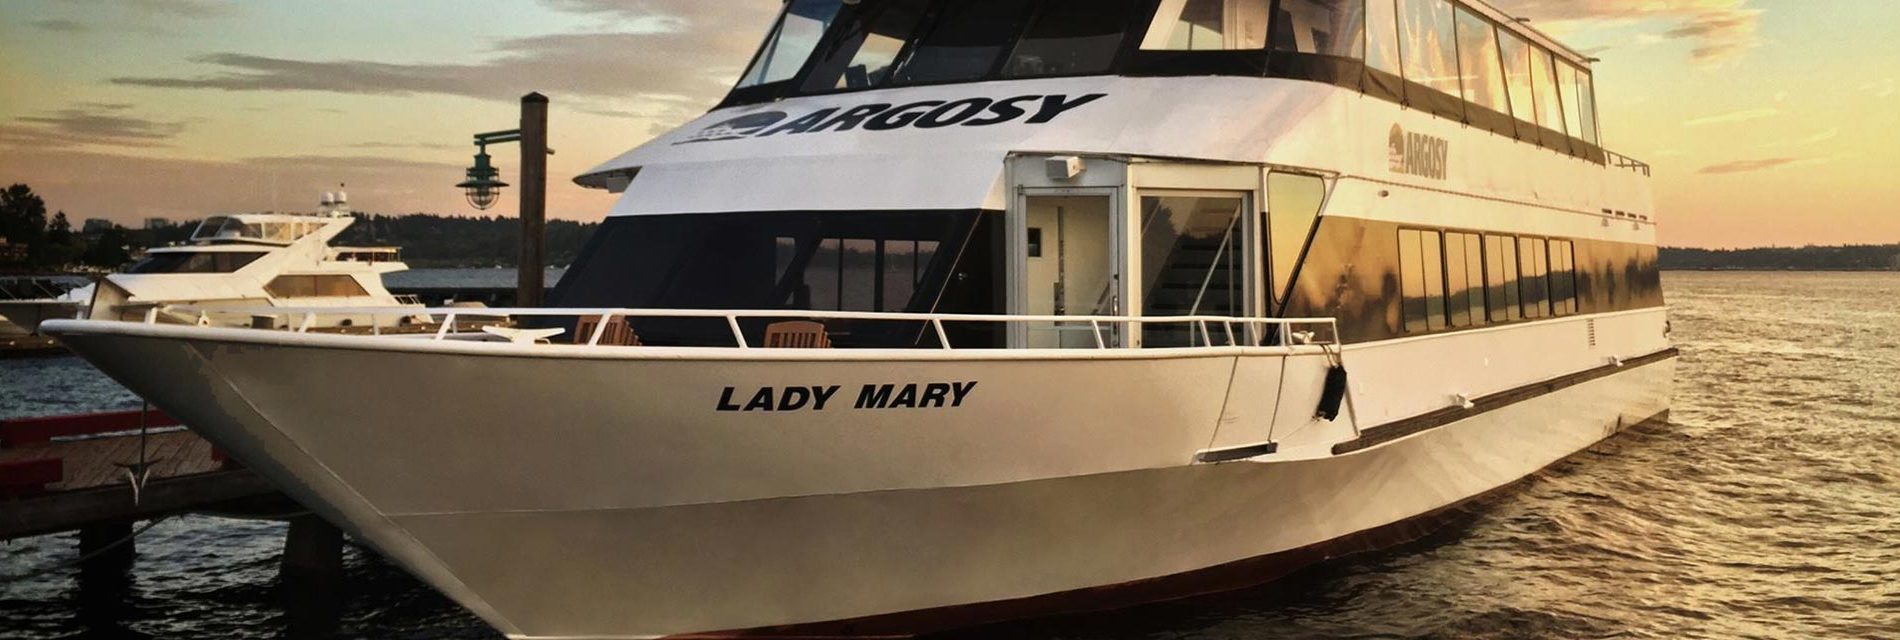 argosy-marquee-LadyMary-low-res-1900x640